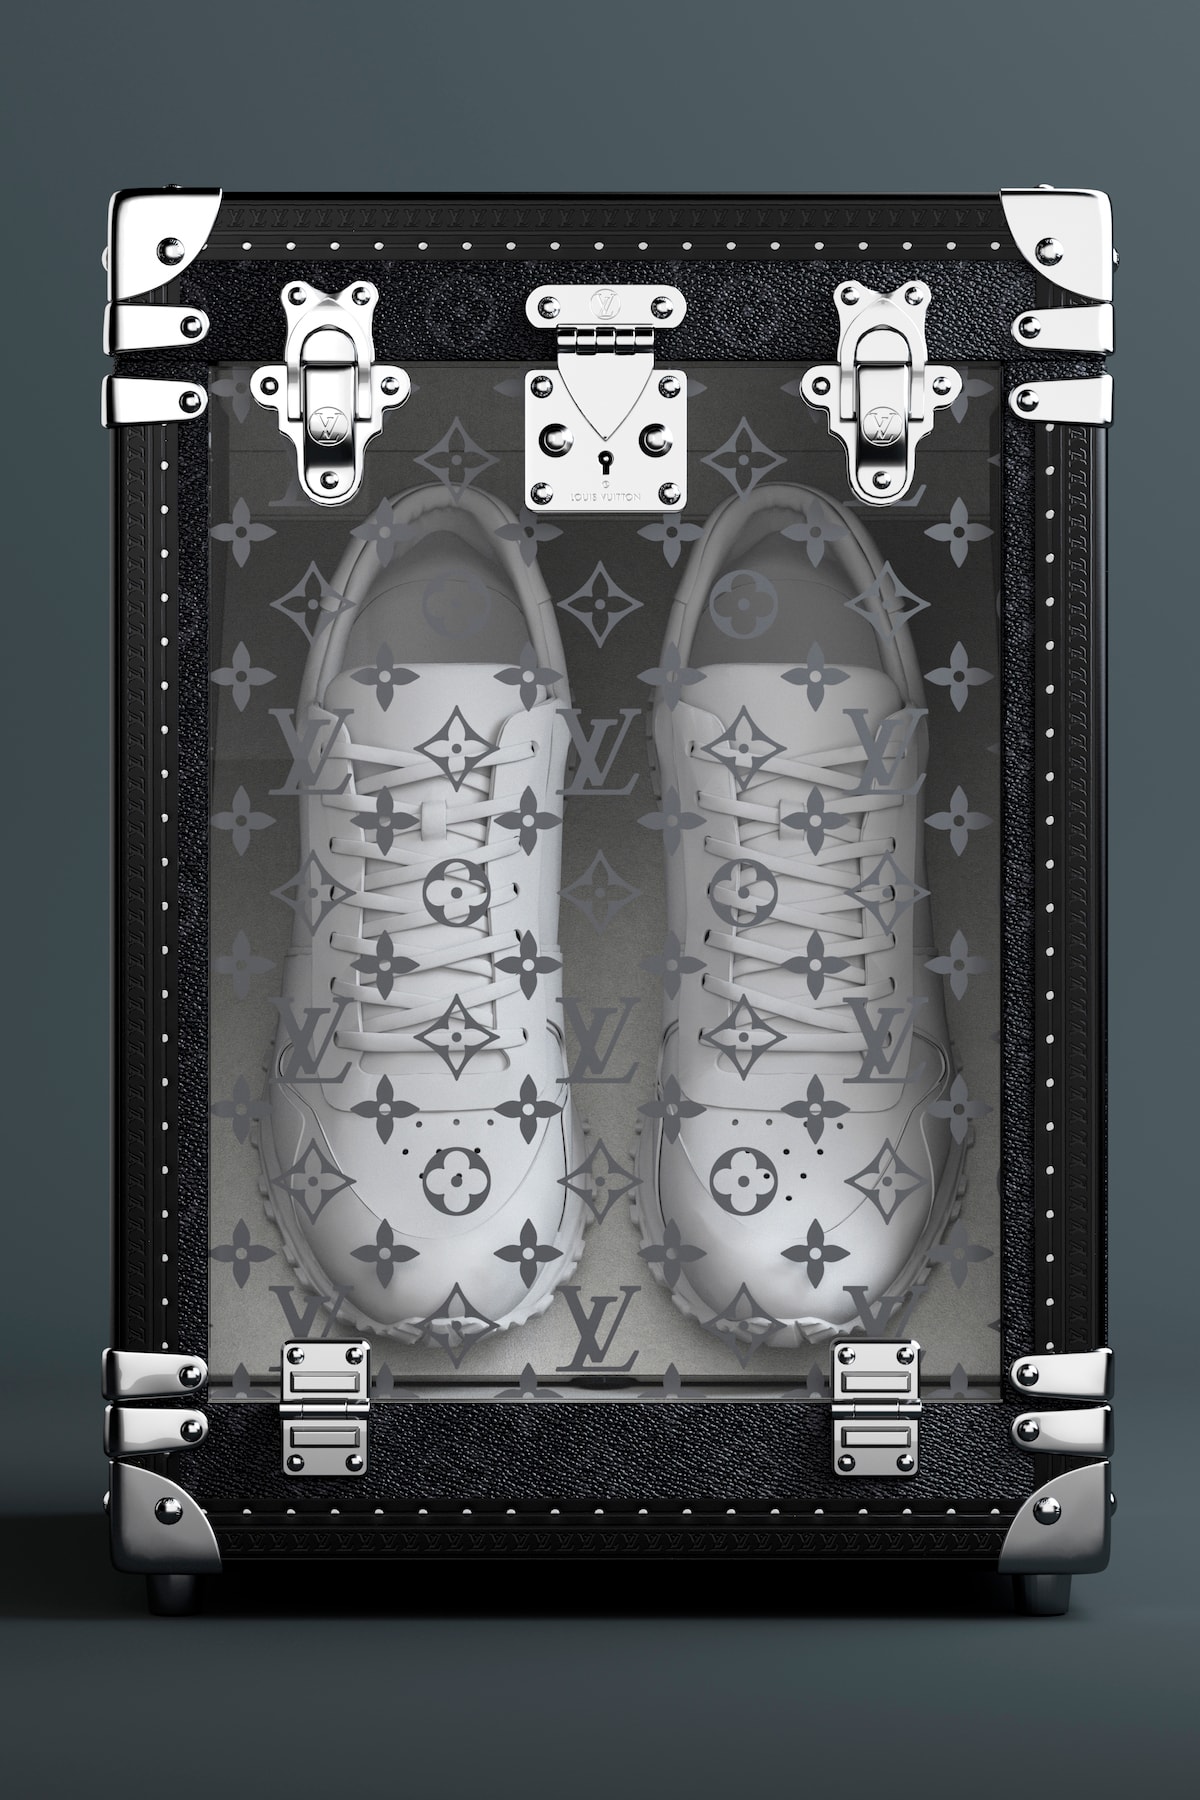 Louis Vuitton Luxury Monogram Trunk Collection Makeup Case Sneaker Storage Drink Bar Tea Set Cake LV Interior Homeware 